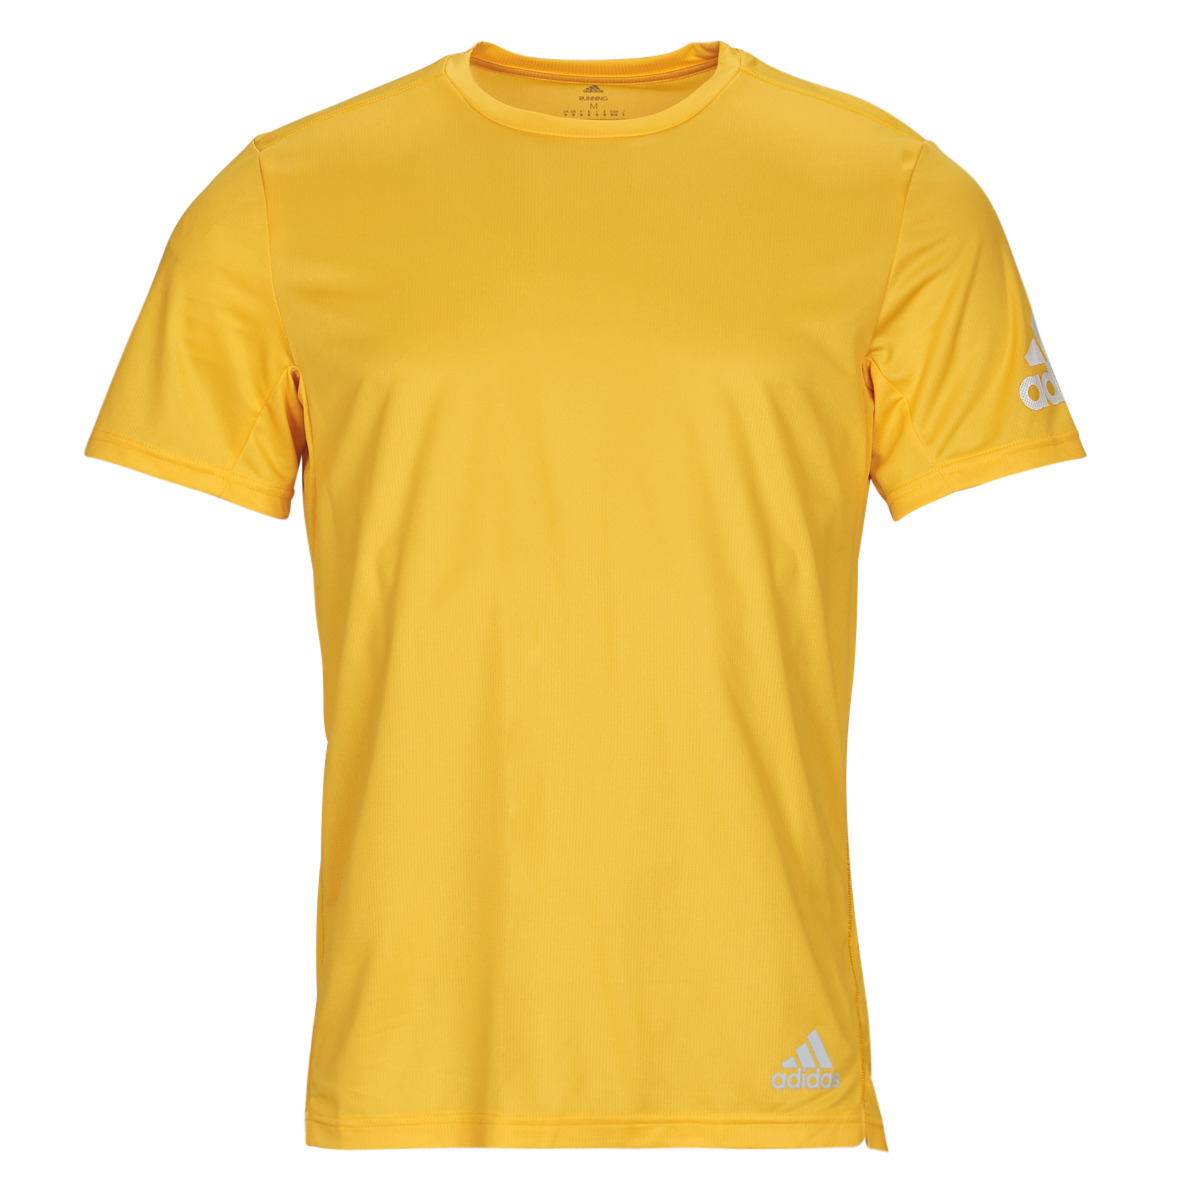 Adidas Yellow Men's T-Shirt Spartoo GOOFASH